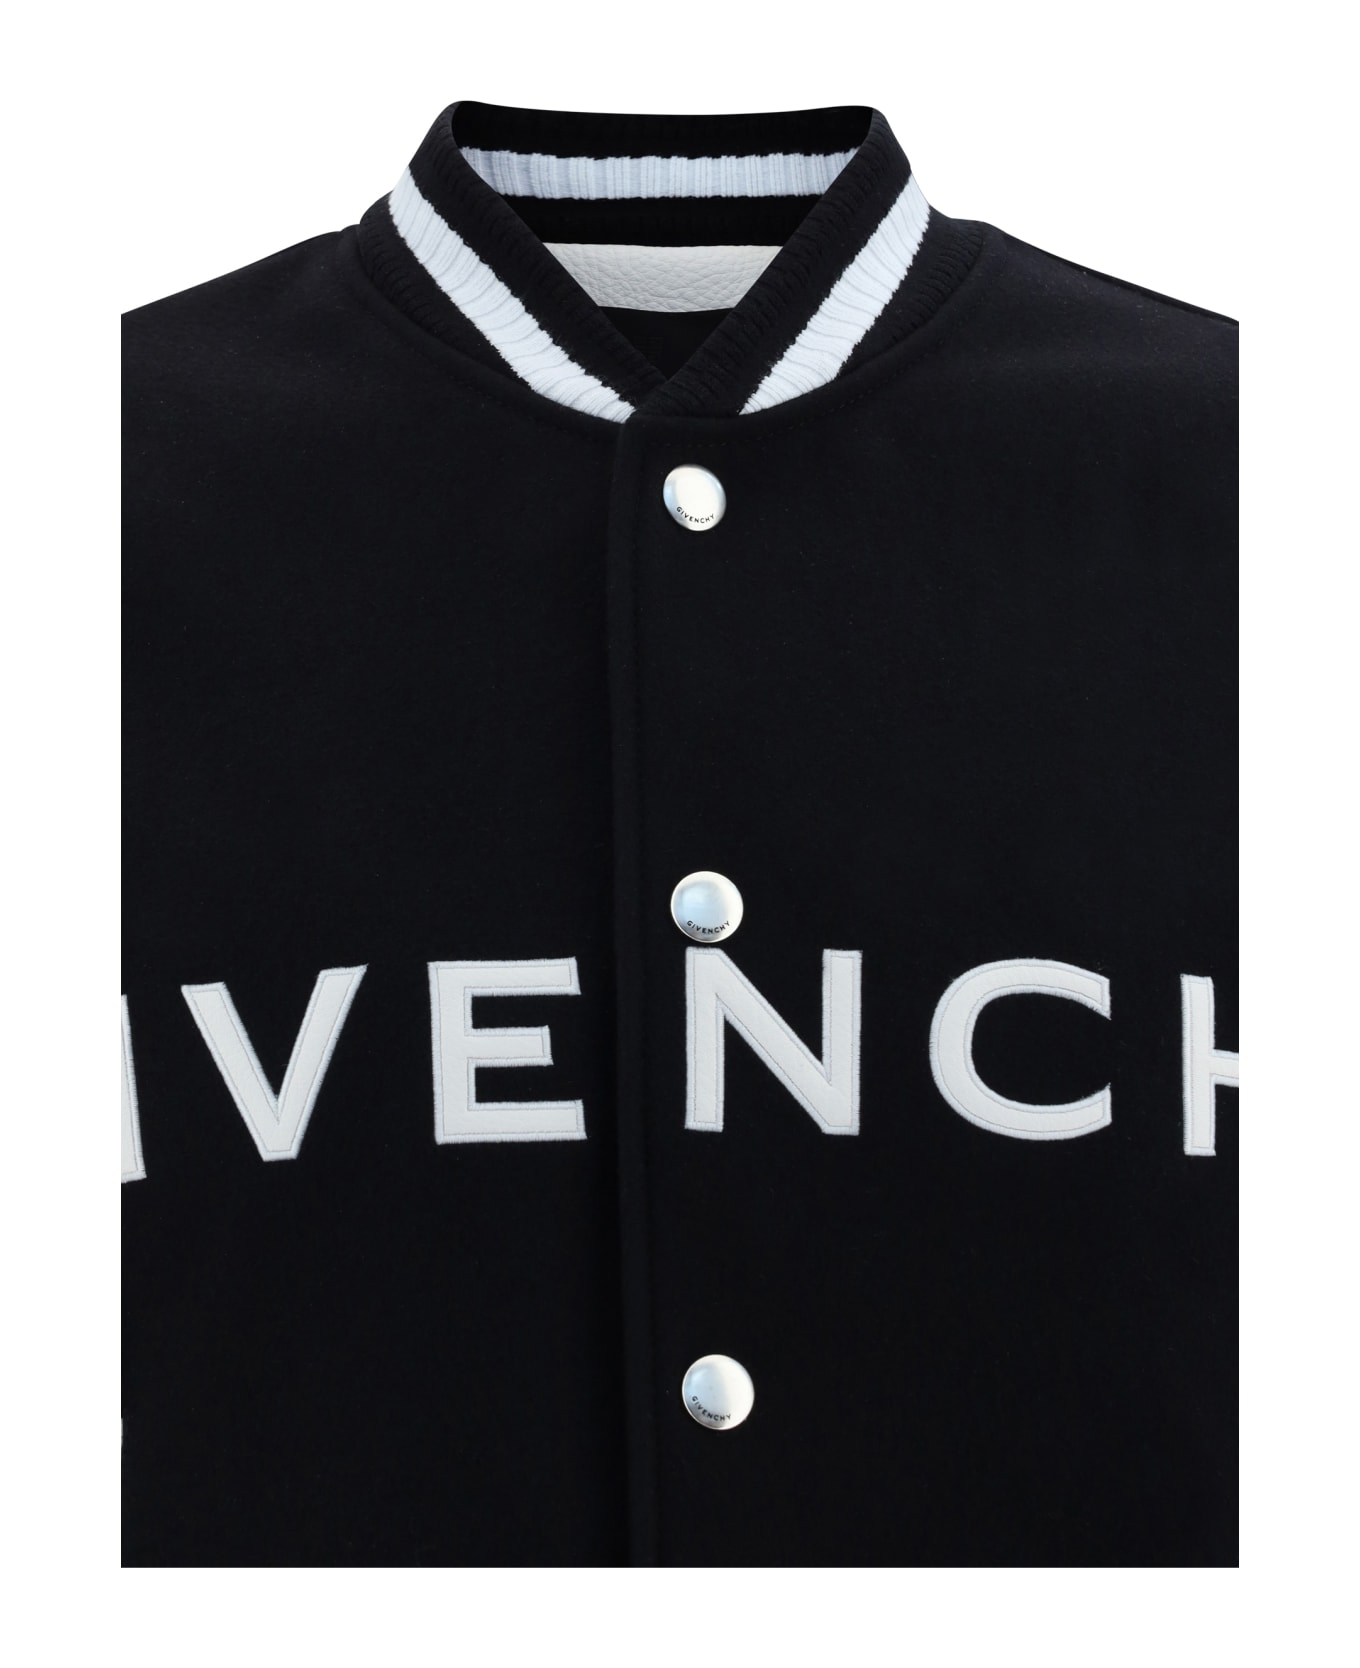 Givenchy Varsity College Jacket - Black